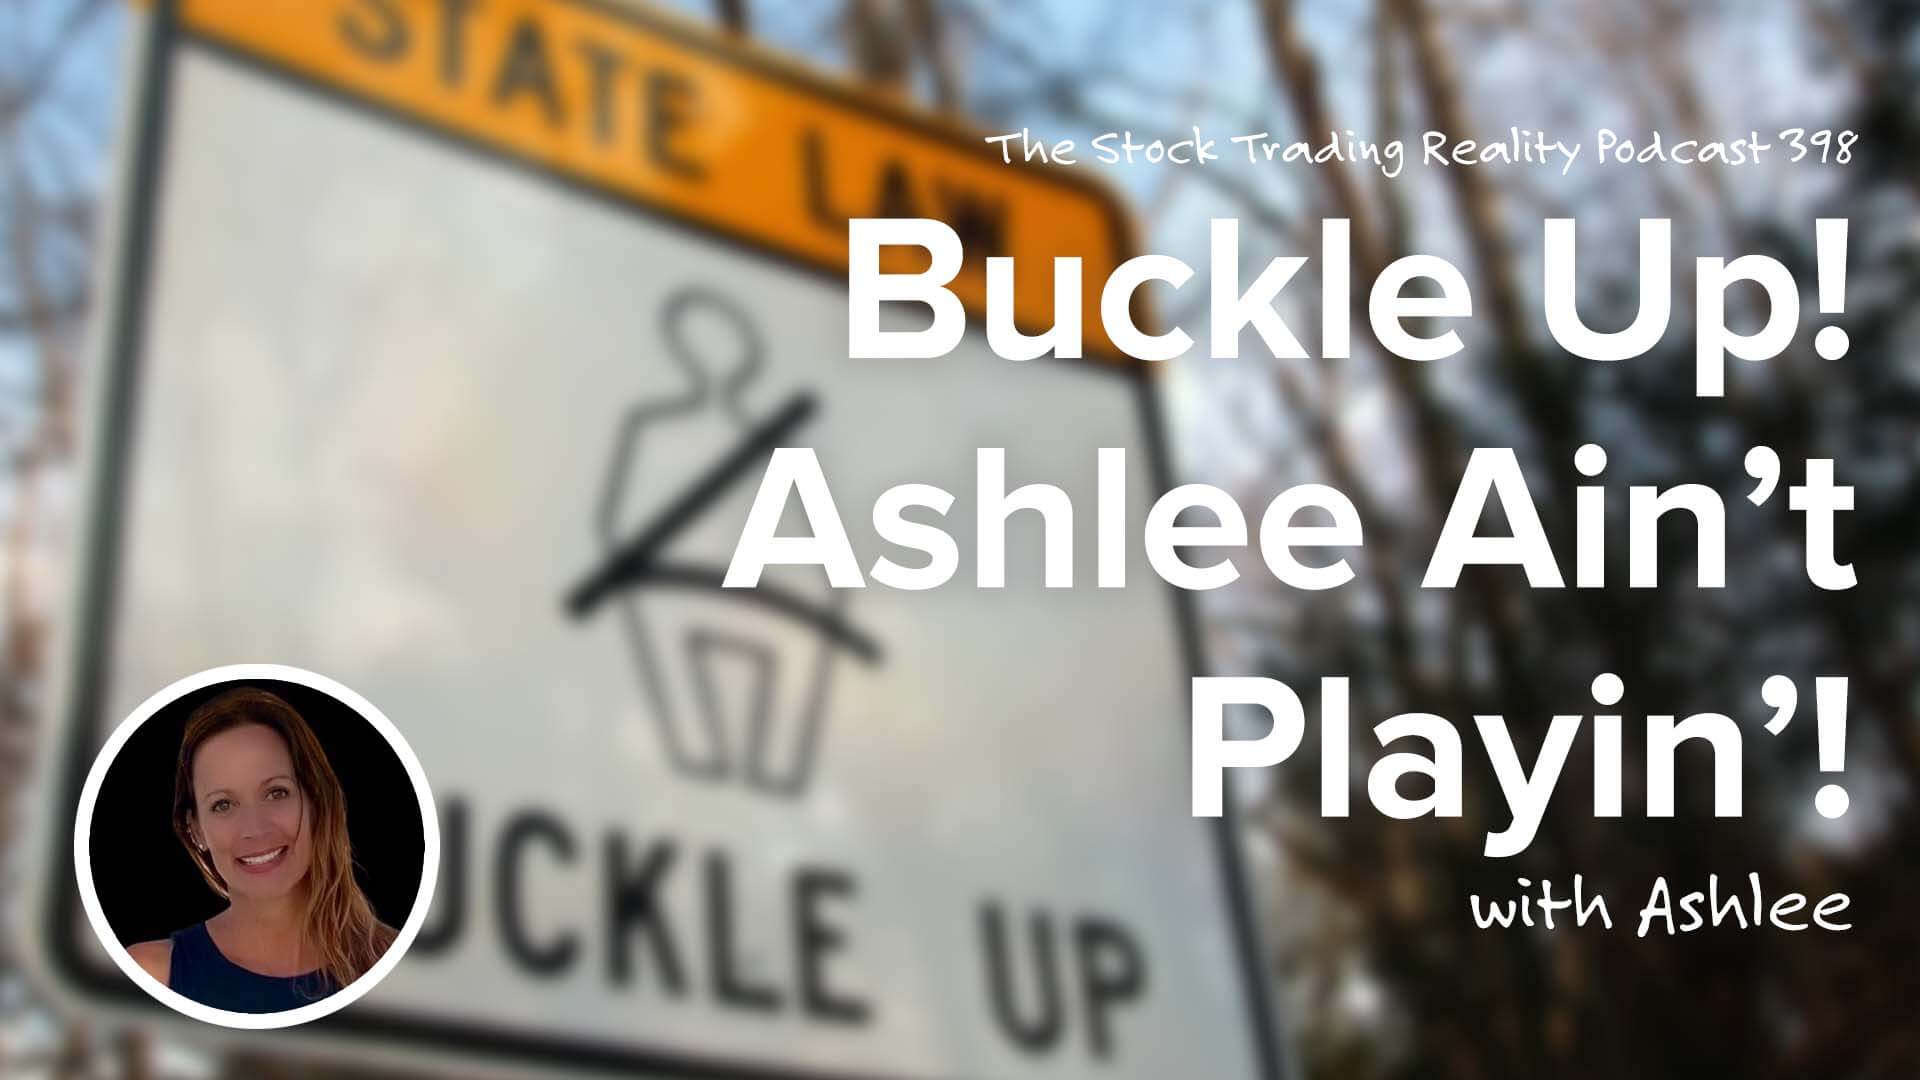 Buckle Up! Ashlee Ain’t Playin’! | STR 398